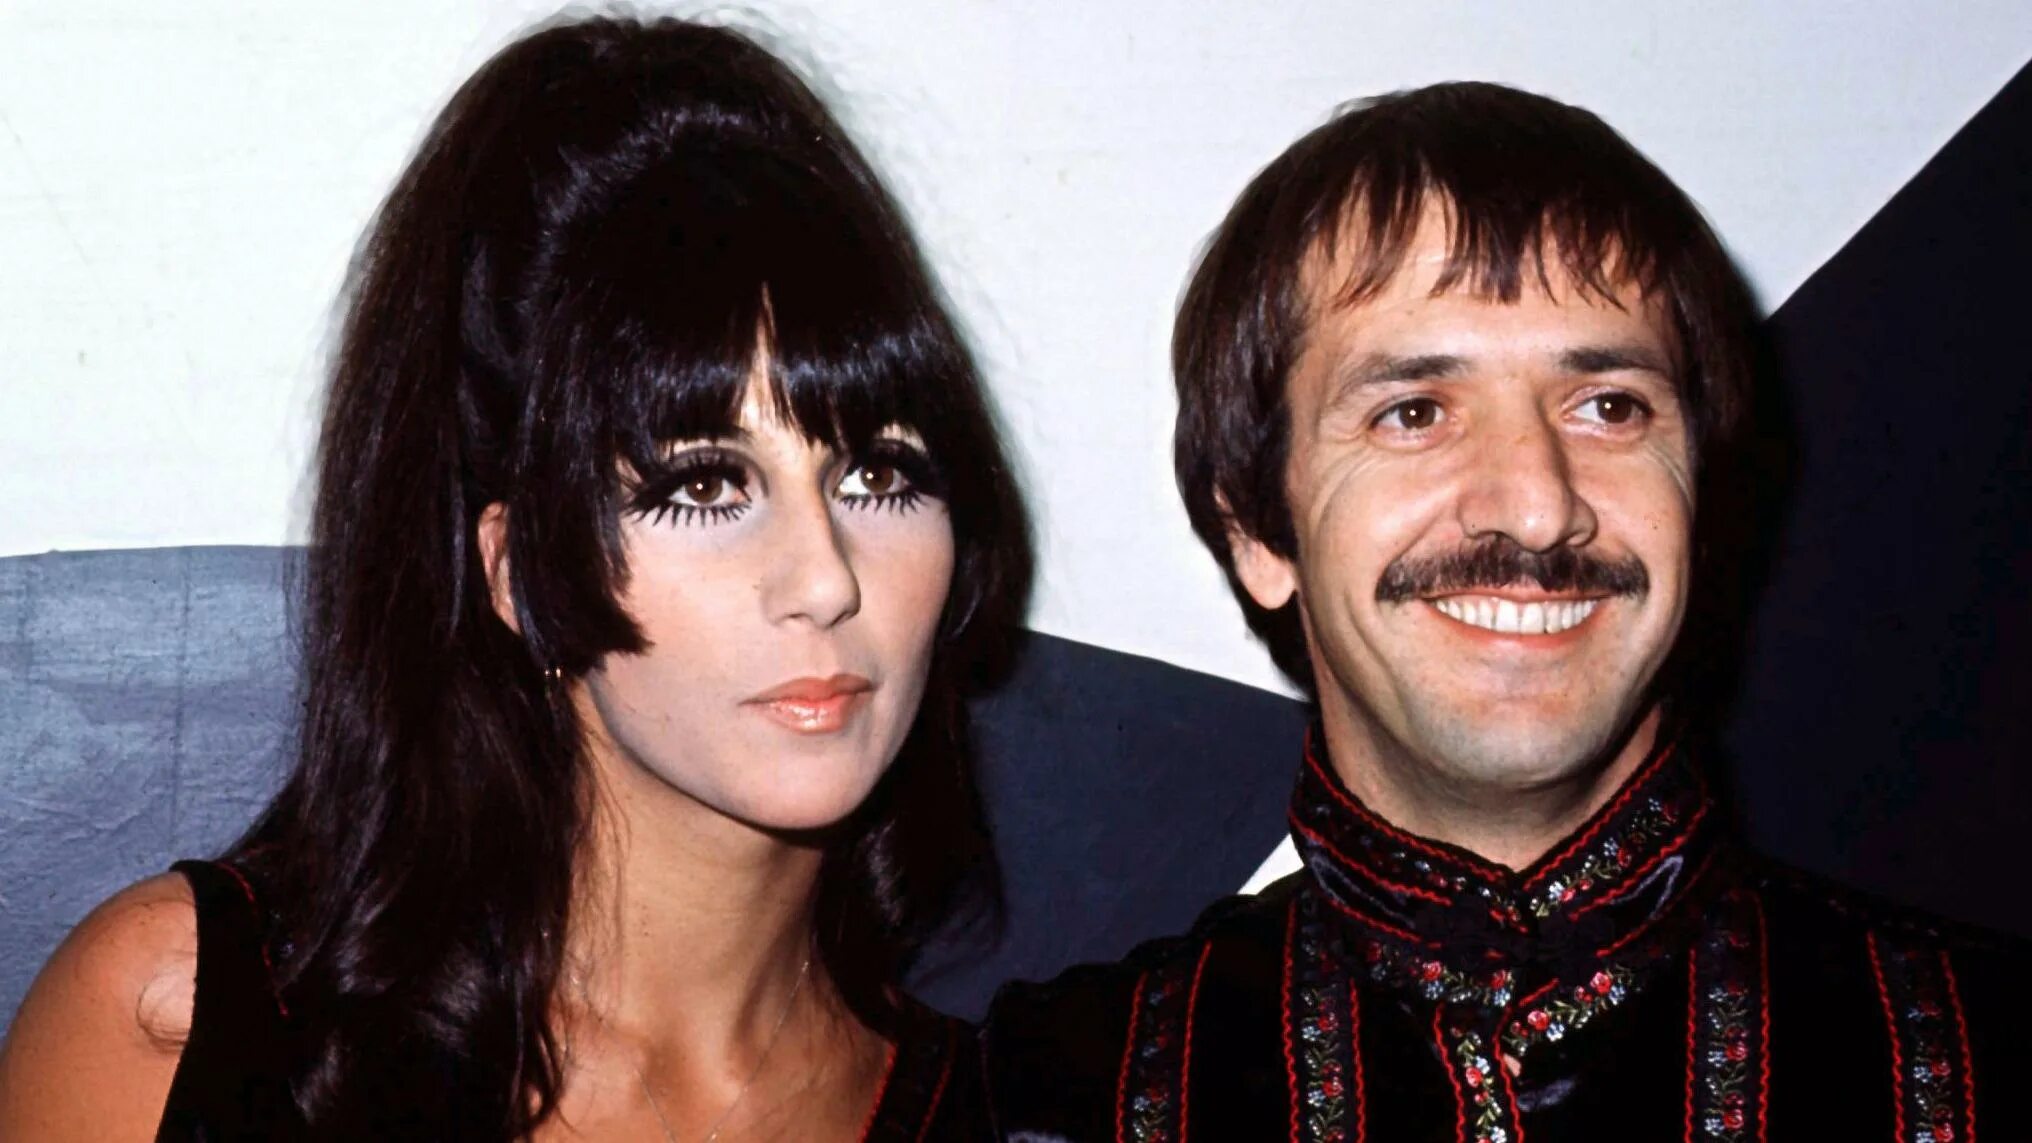 Шер и санни. Сонни и Шер. "Сонни и Шер" ("Sonny & cher"). Cher 1967. Шерилин Саркисян и Сонни Боно.